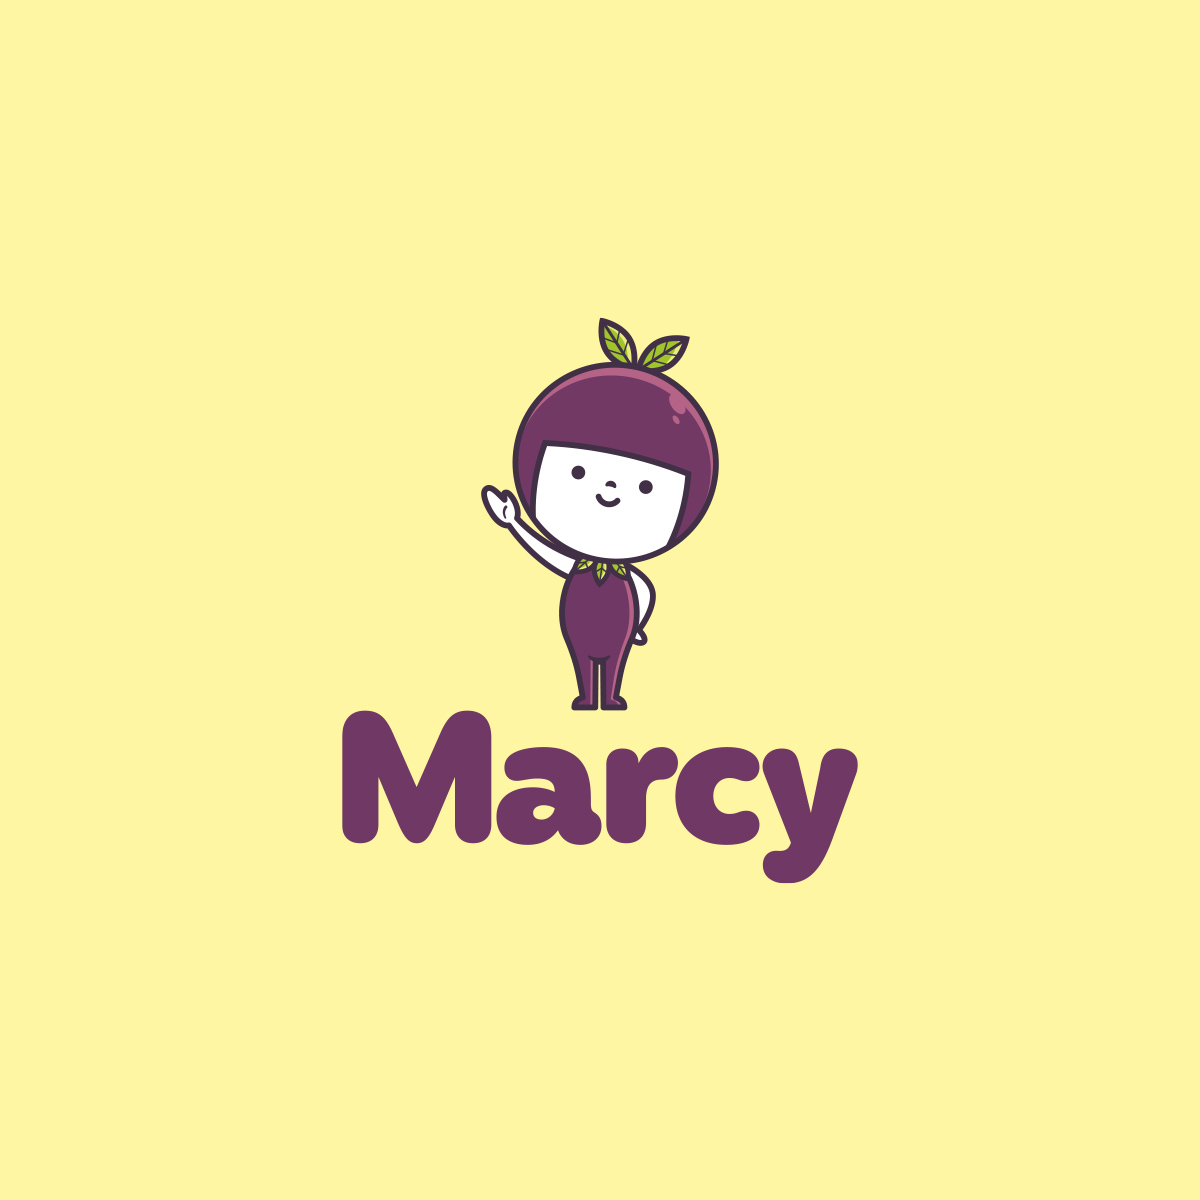 Various-Logos_Marcy